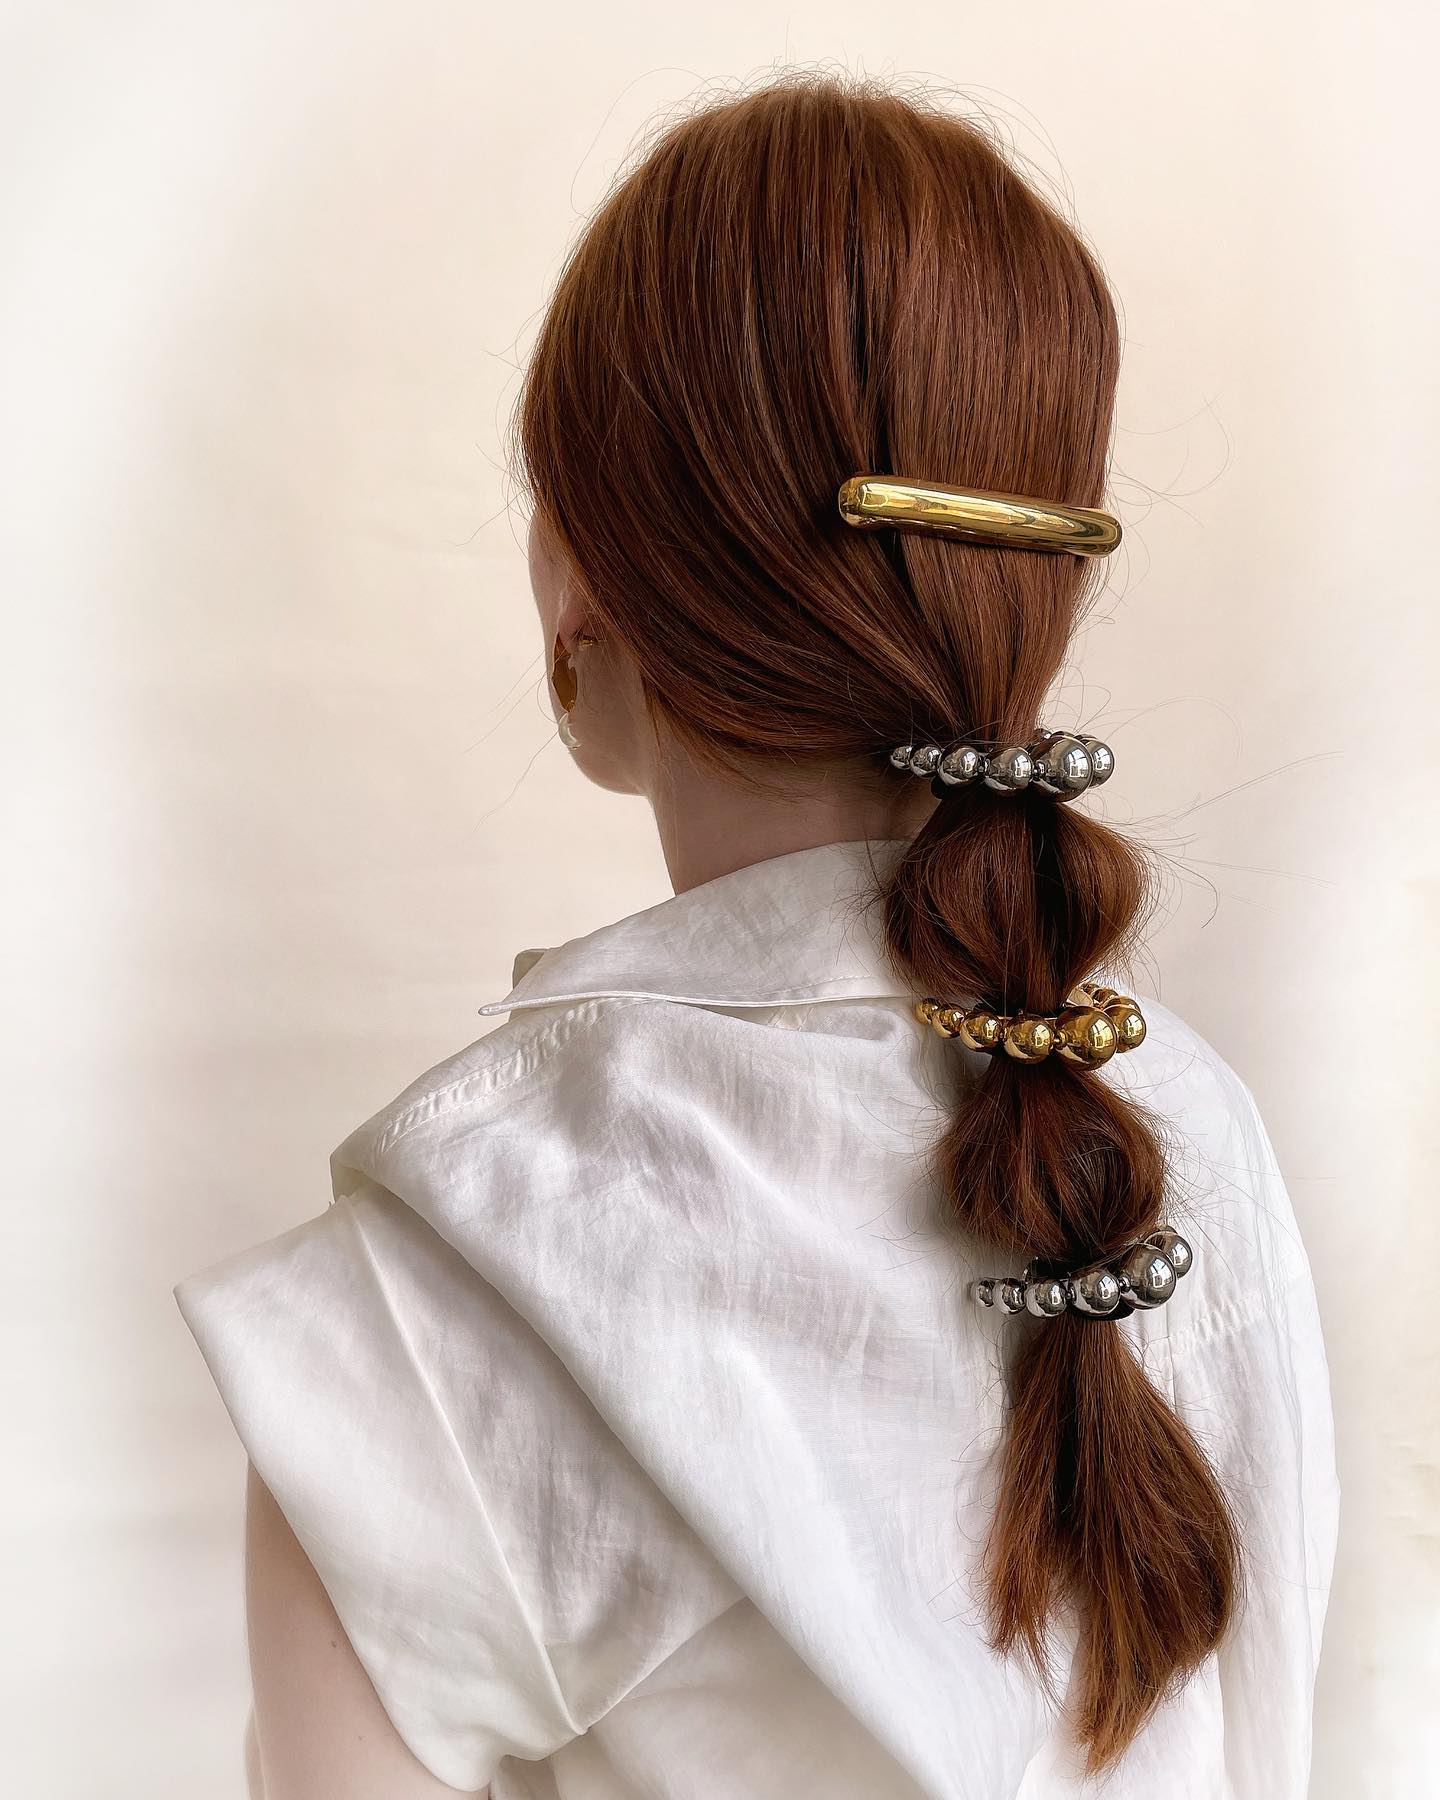 bubble braid ponytail